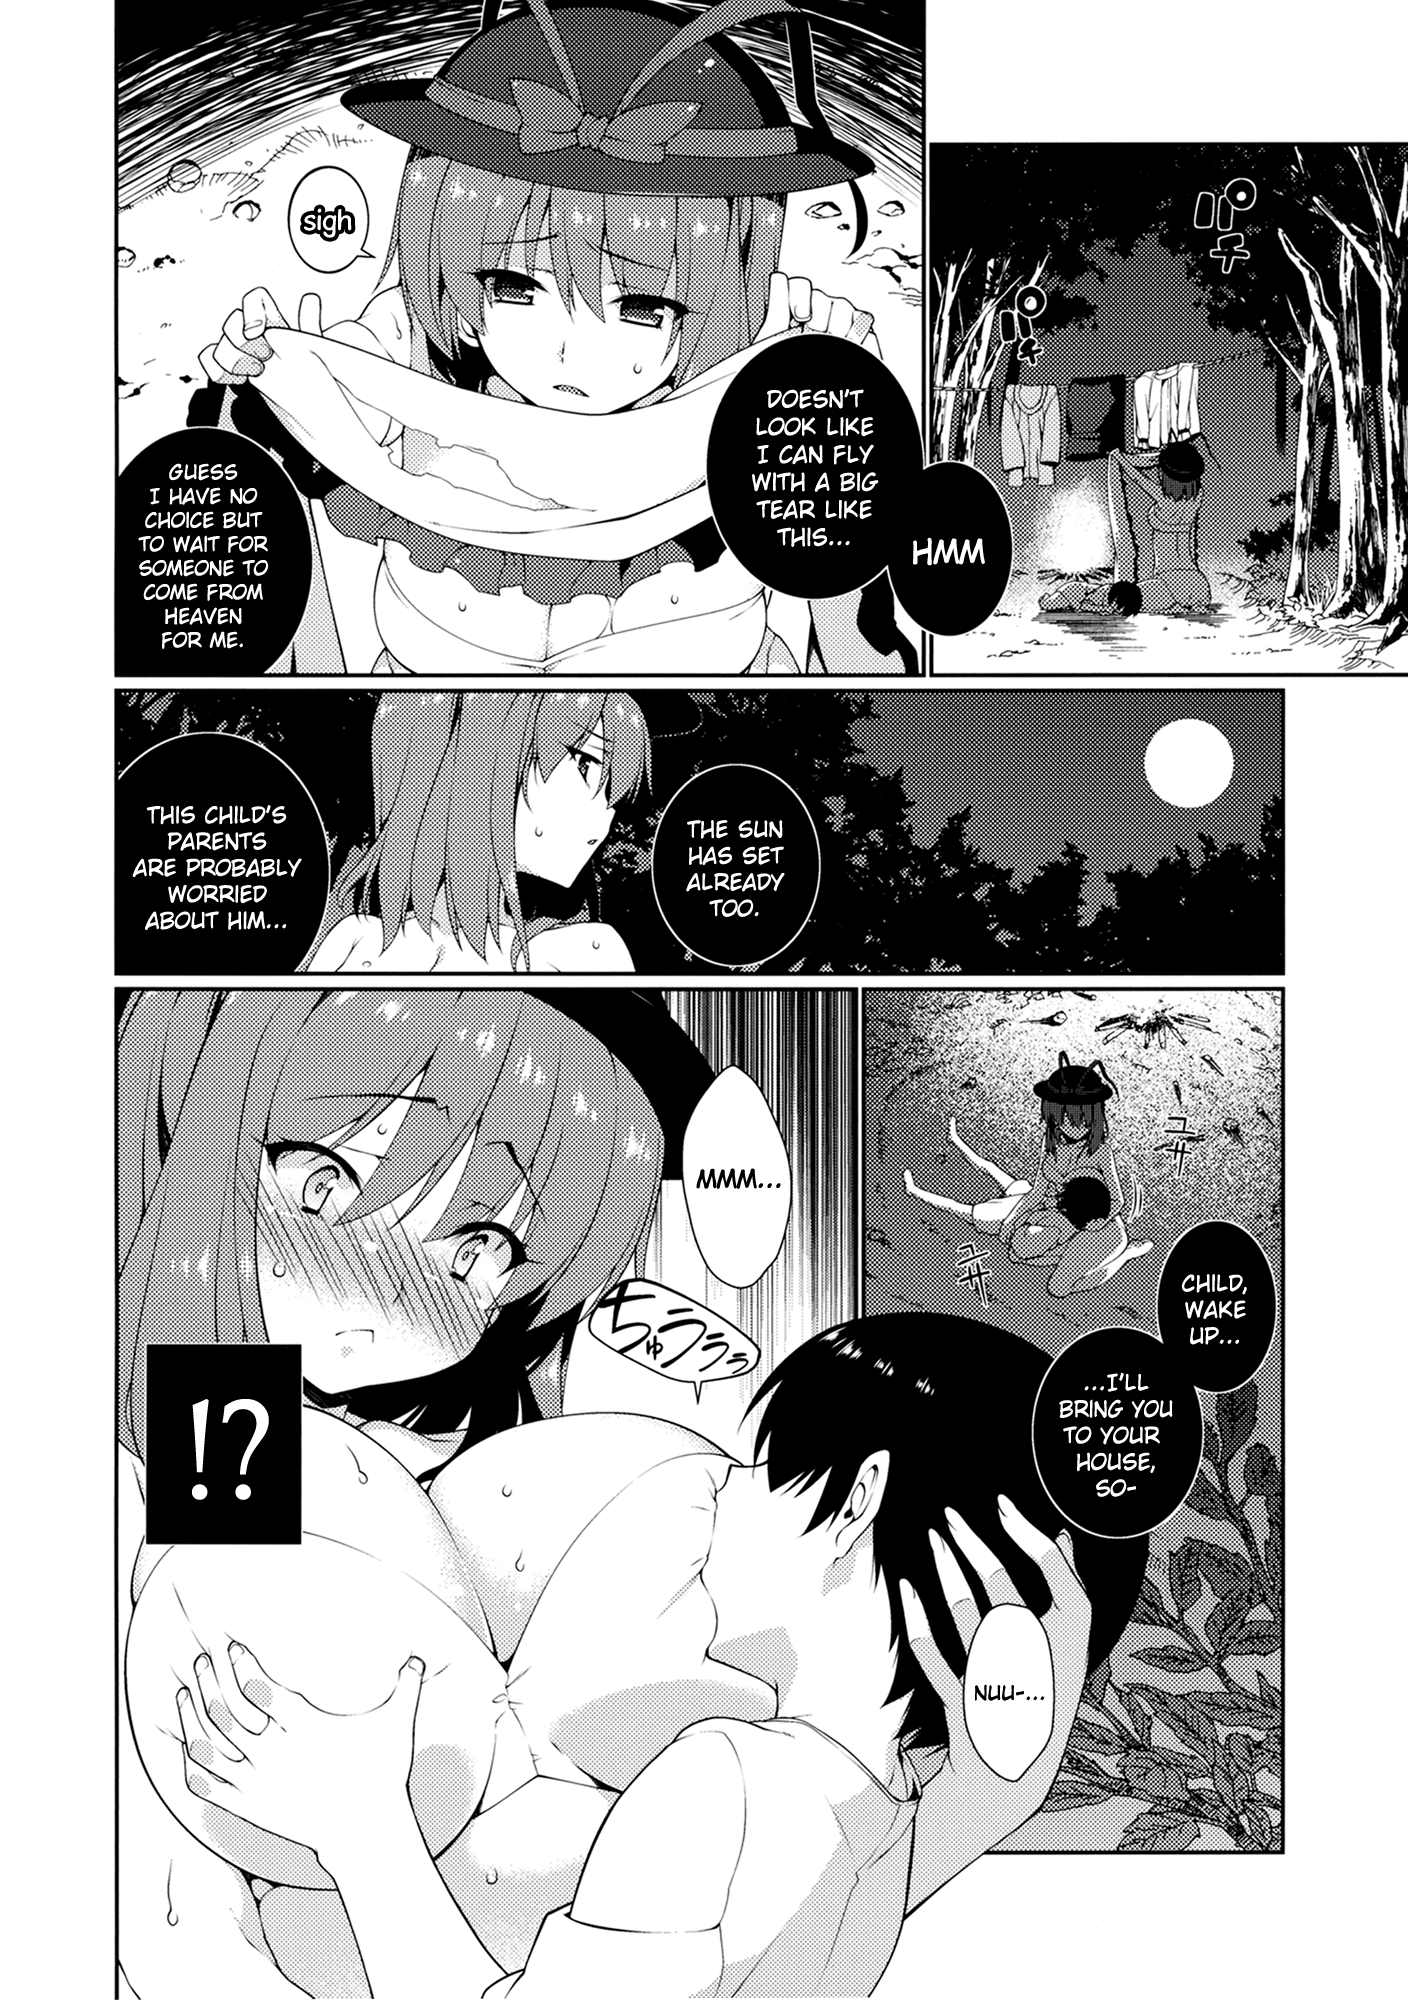 HI-Sexual Under Age hentai manga picture 3